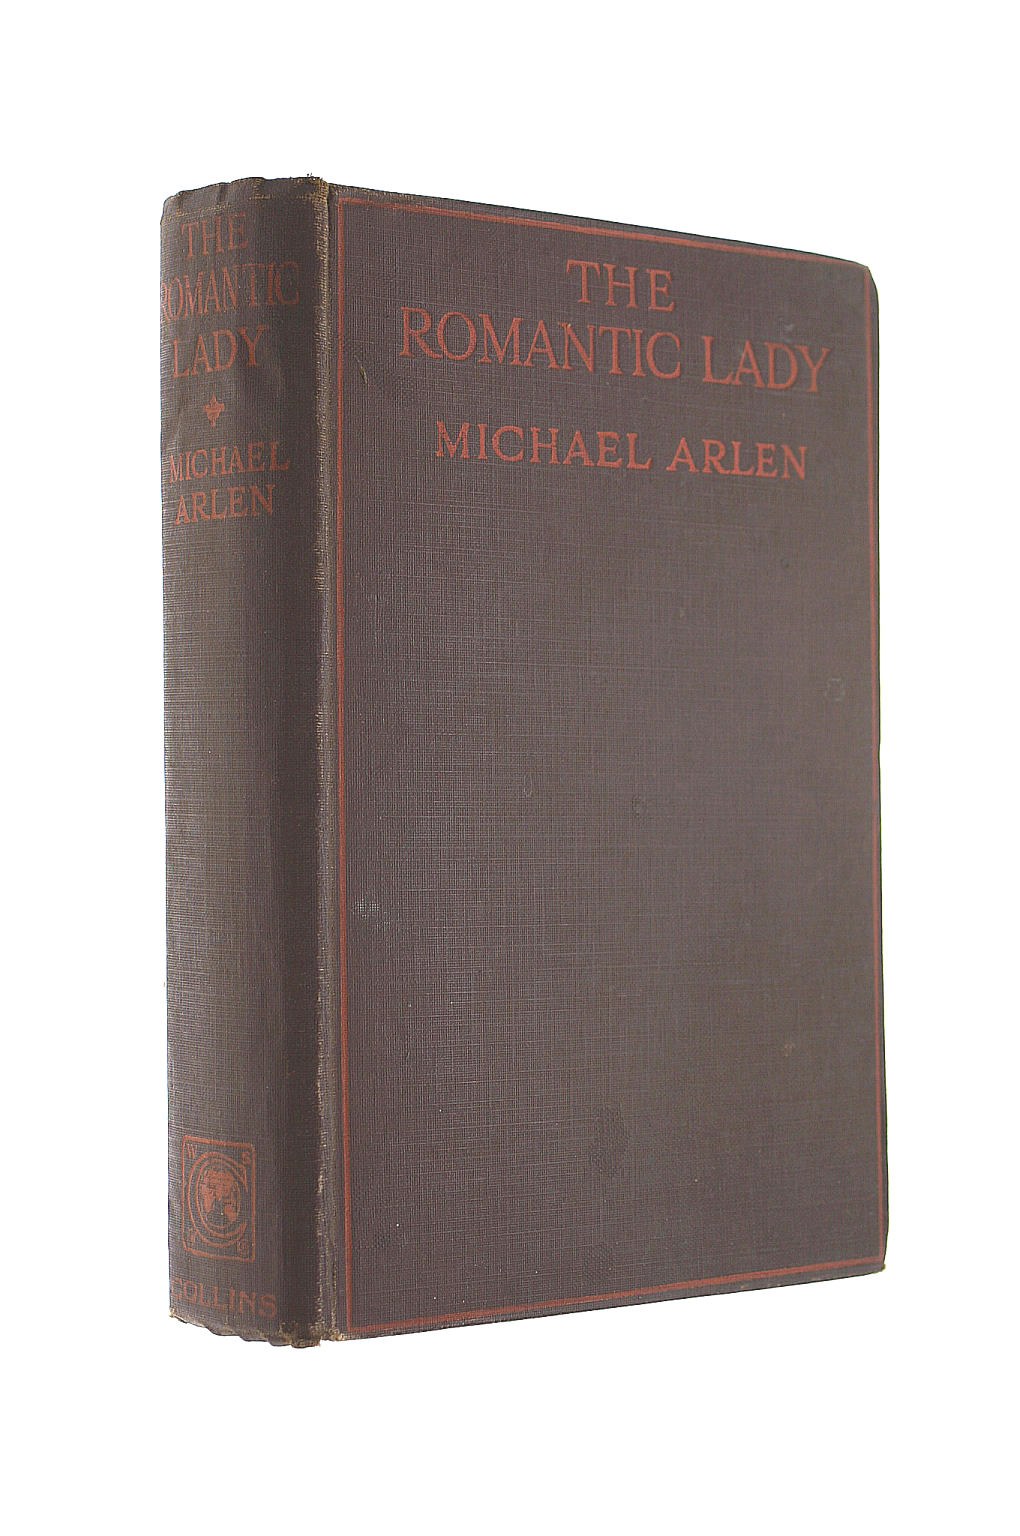 ARLEN, MICHAEL - The Romantic Lady